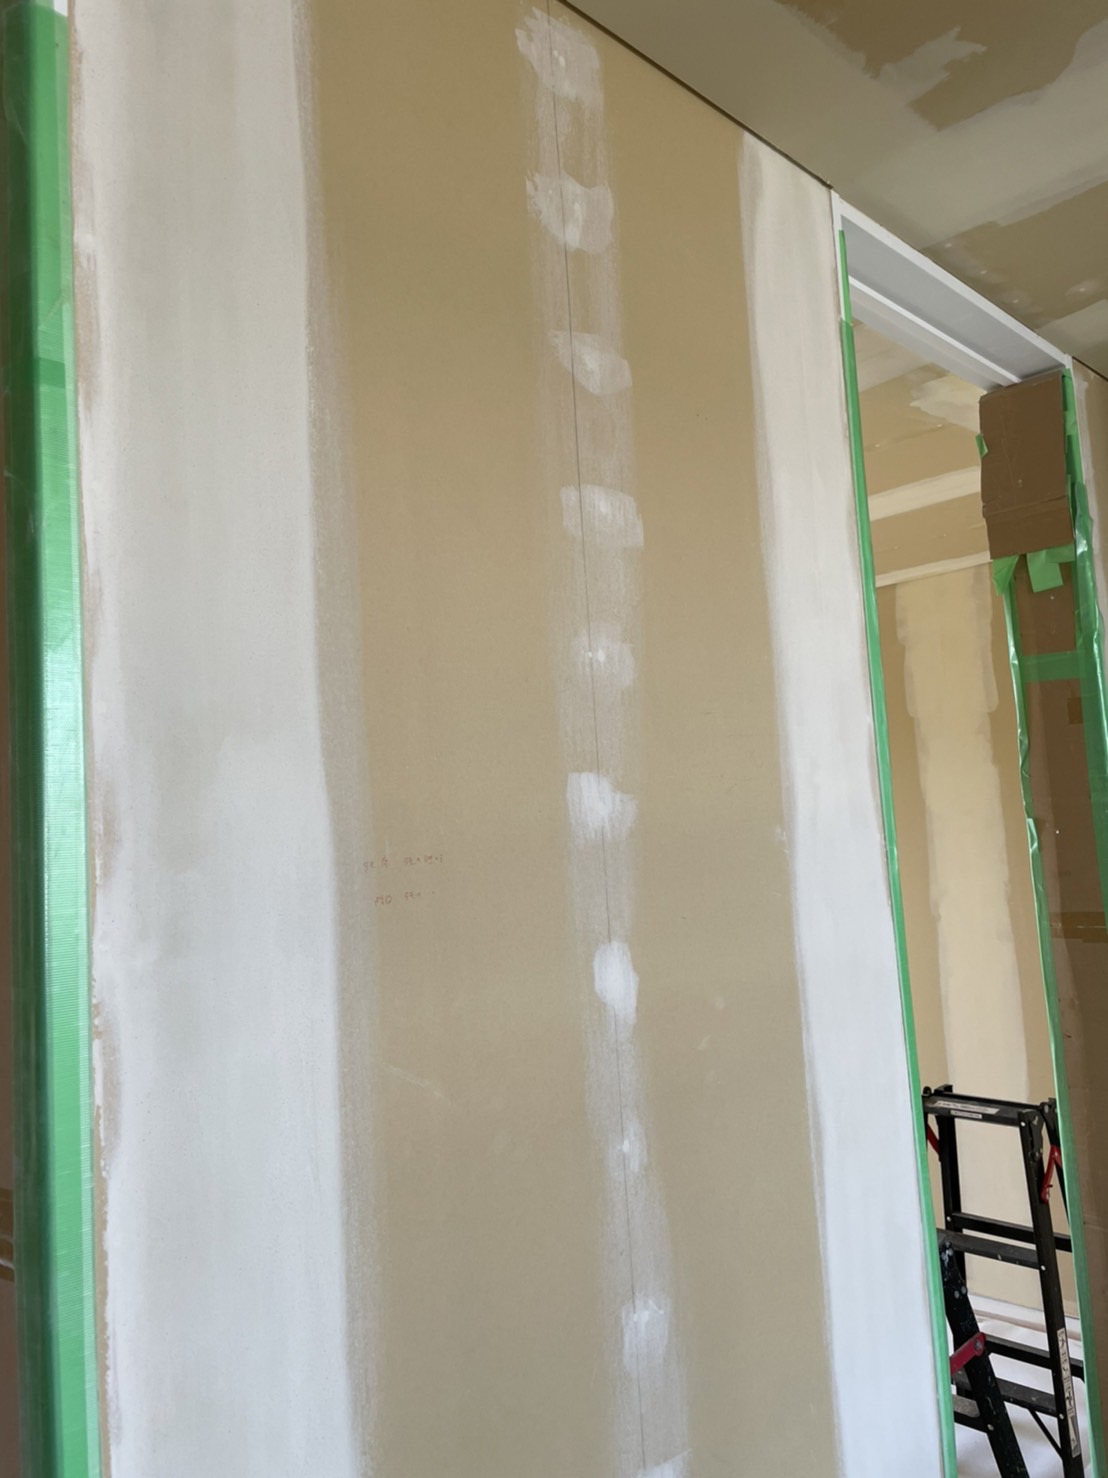 新築内部壁吹き付け塗装